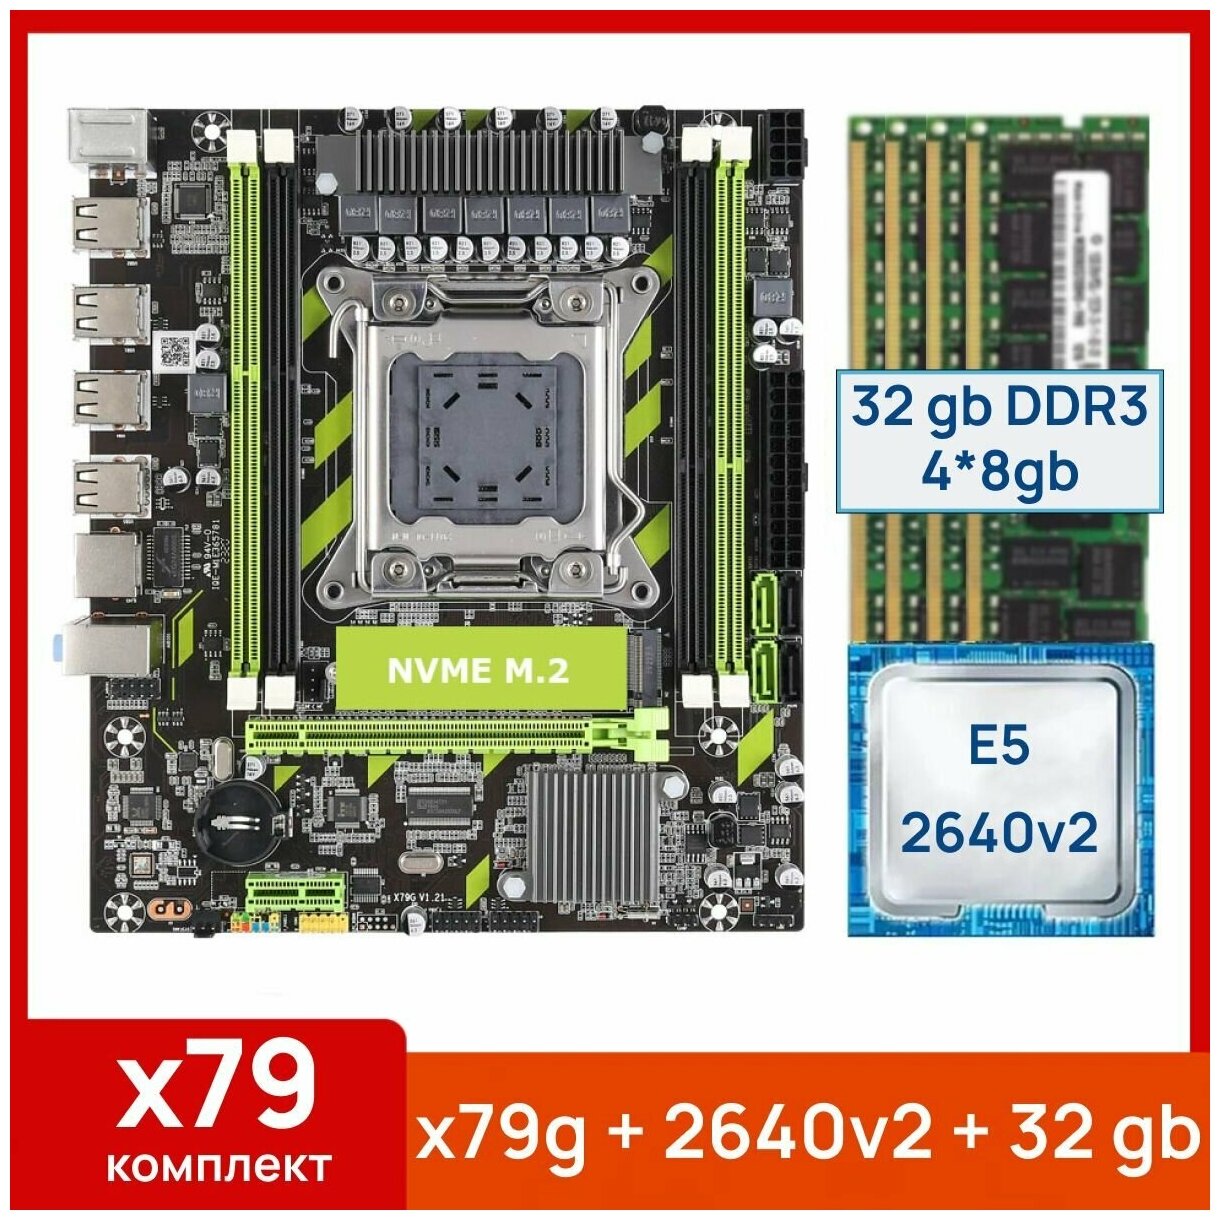 Комплект: Atermiter x79g + Xeon E5 2640v2 + 32 gb(4x8gb) DDR3 ecc reg